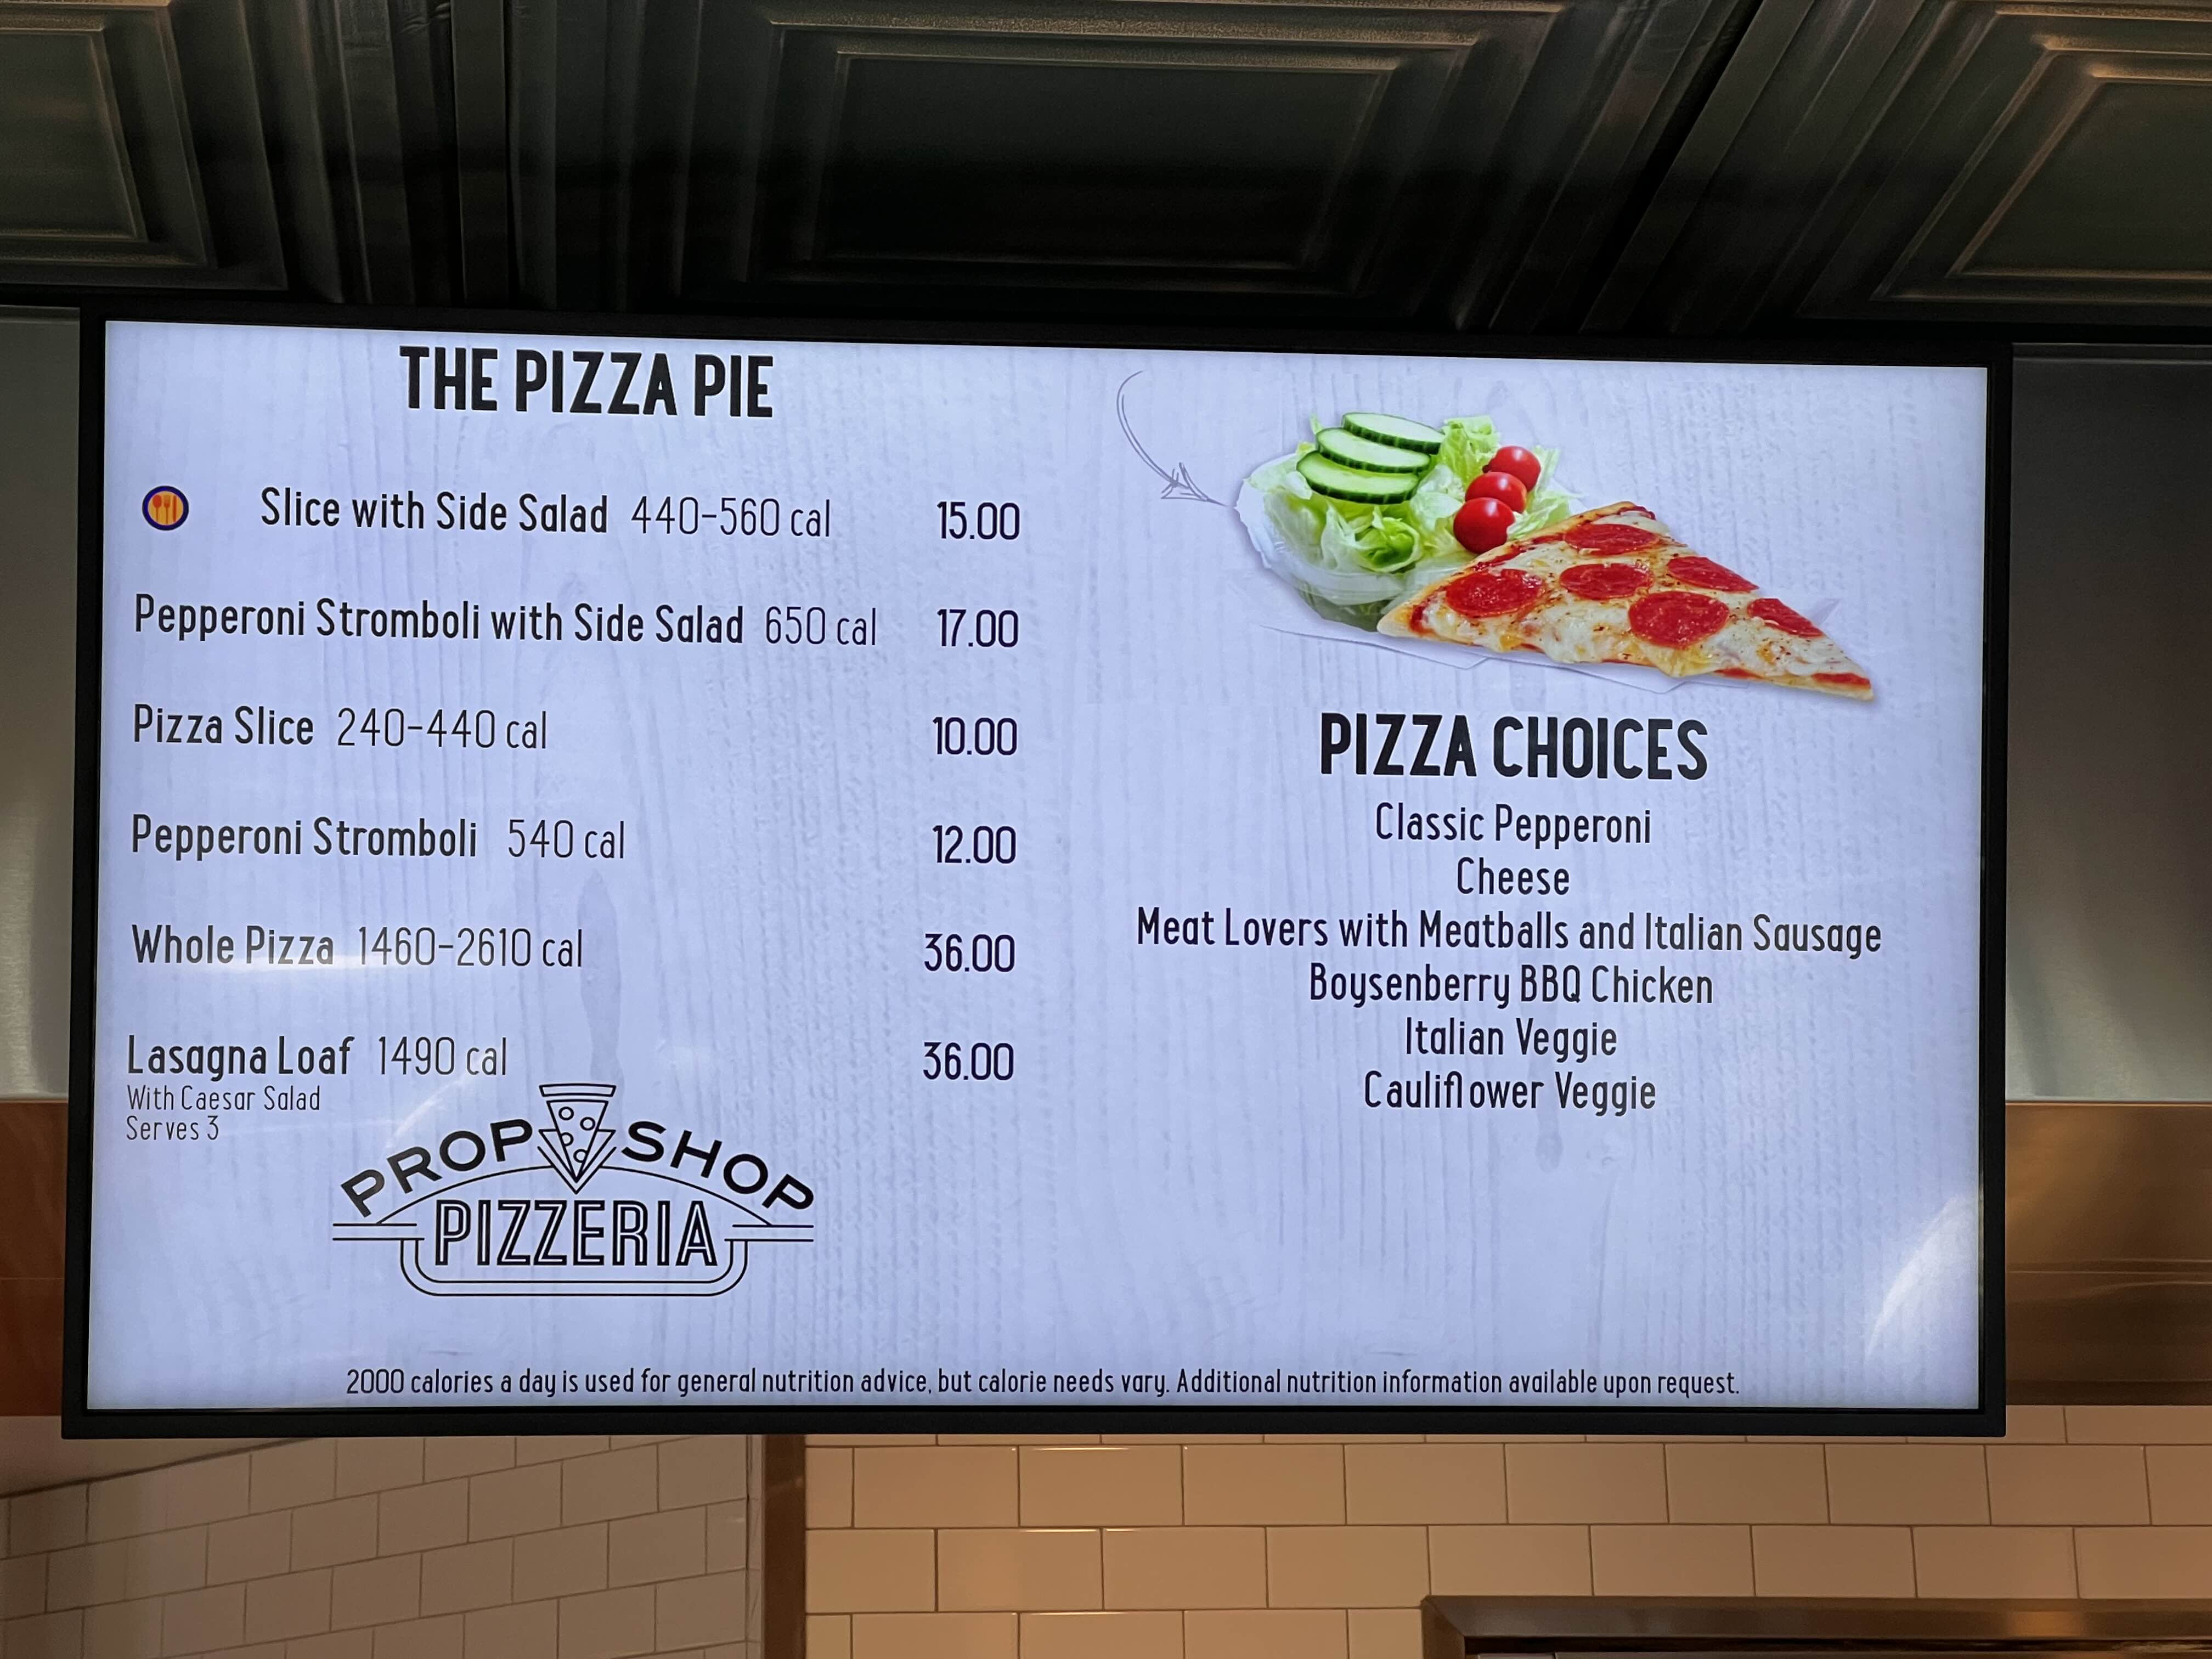 prop shop pizzeria 피자 메뉴판입니다.